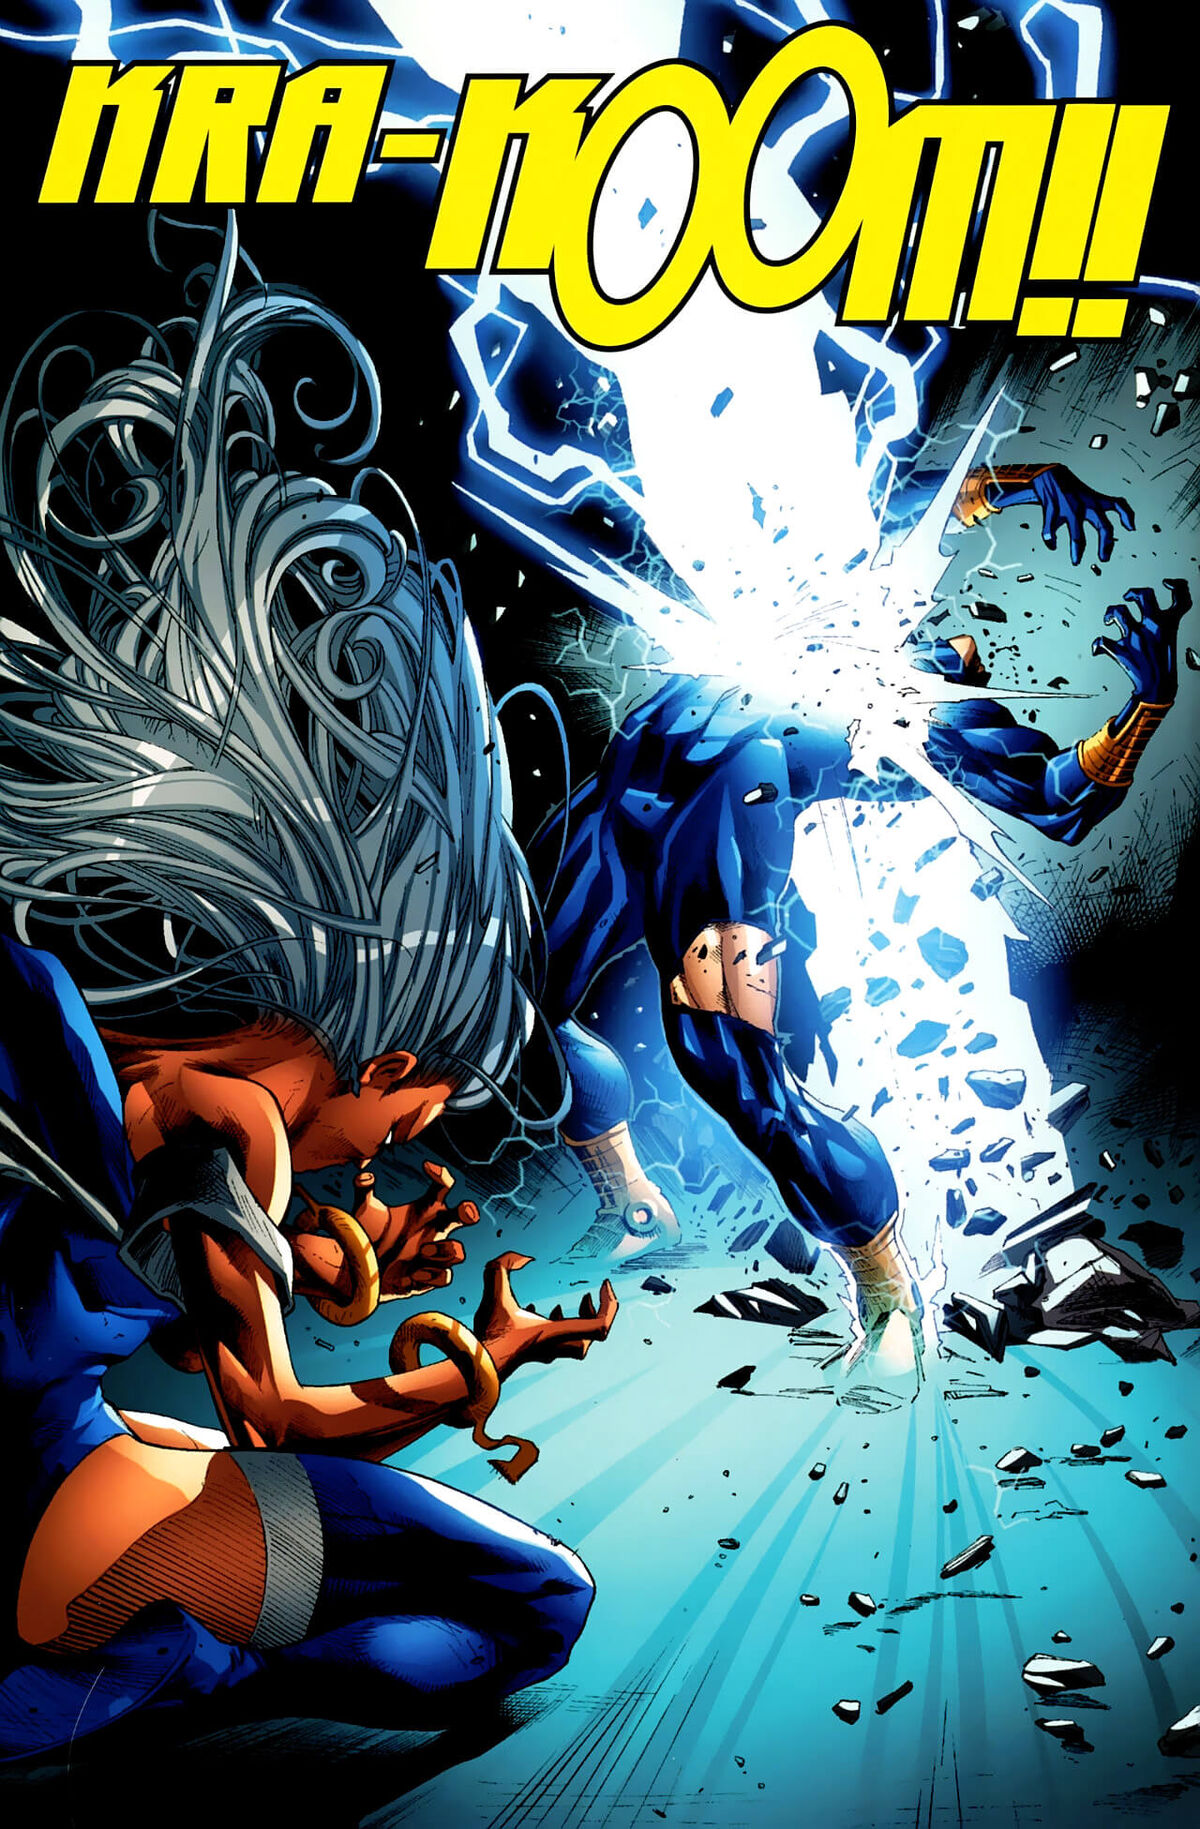 X-Men Worlds Apart Cyclops vs Storm 004